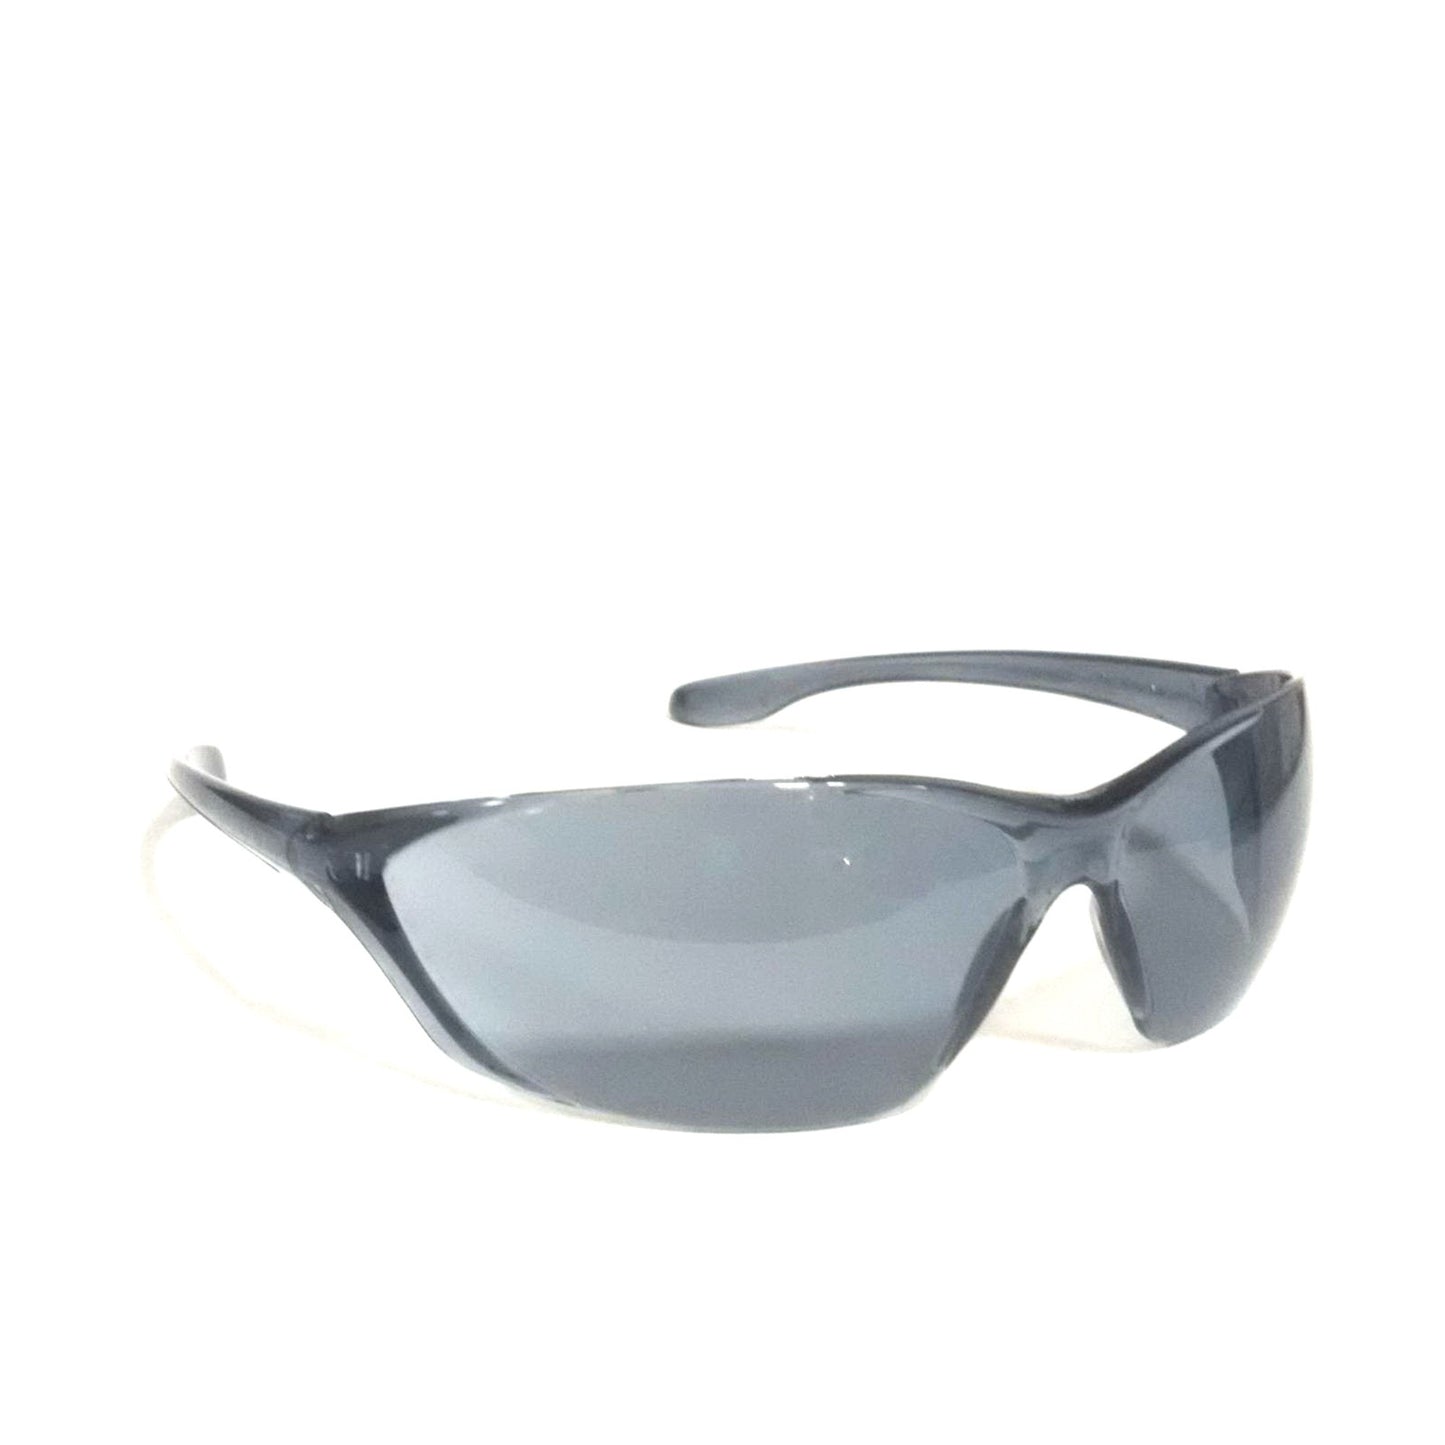 Grey Wraparound Driving Sunglasses: Redefining Road Comfort